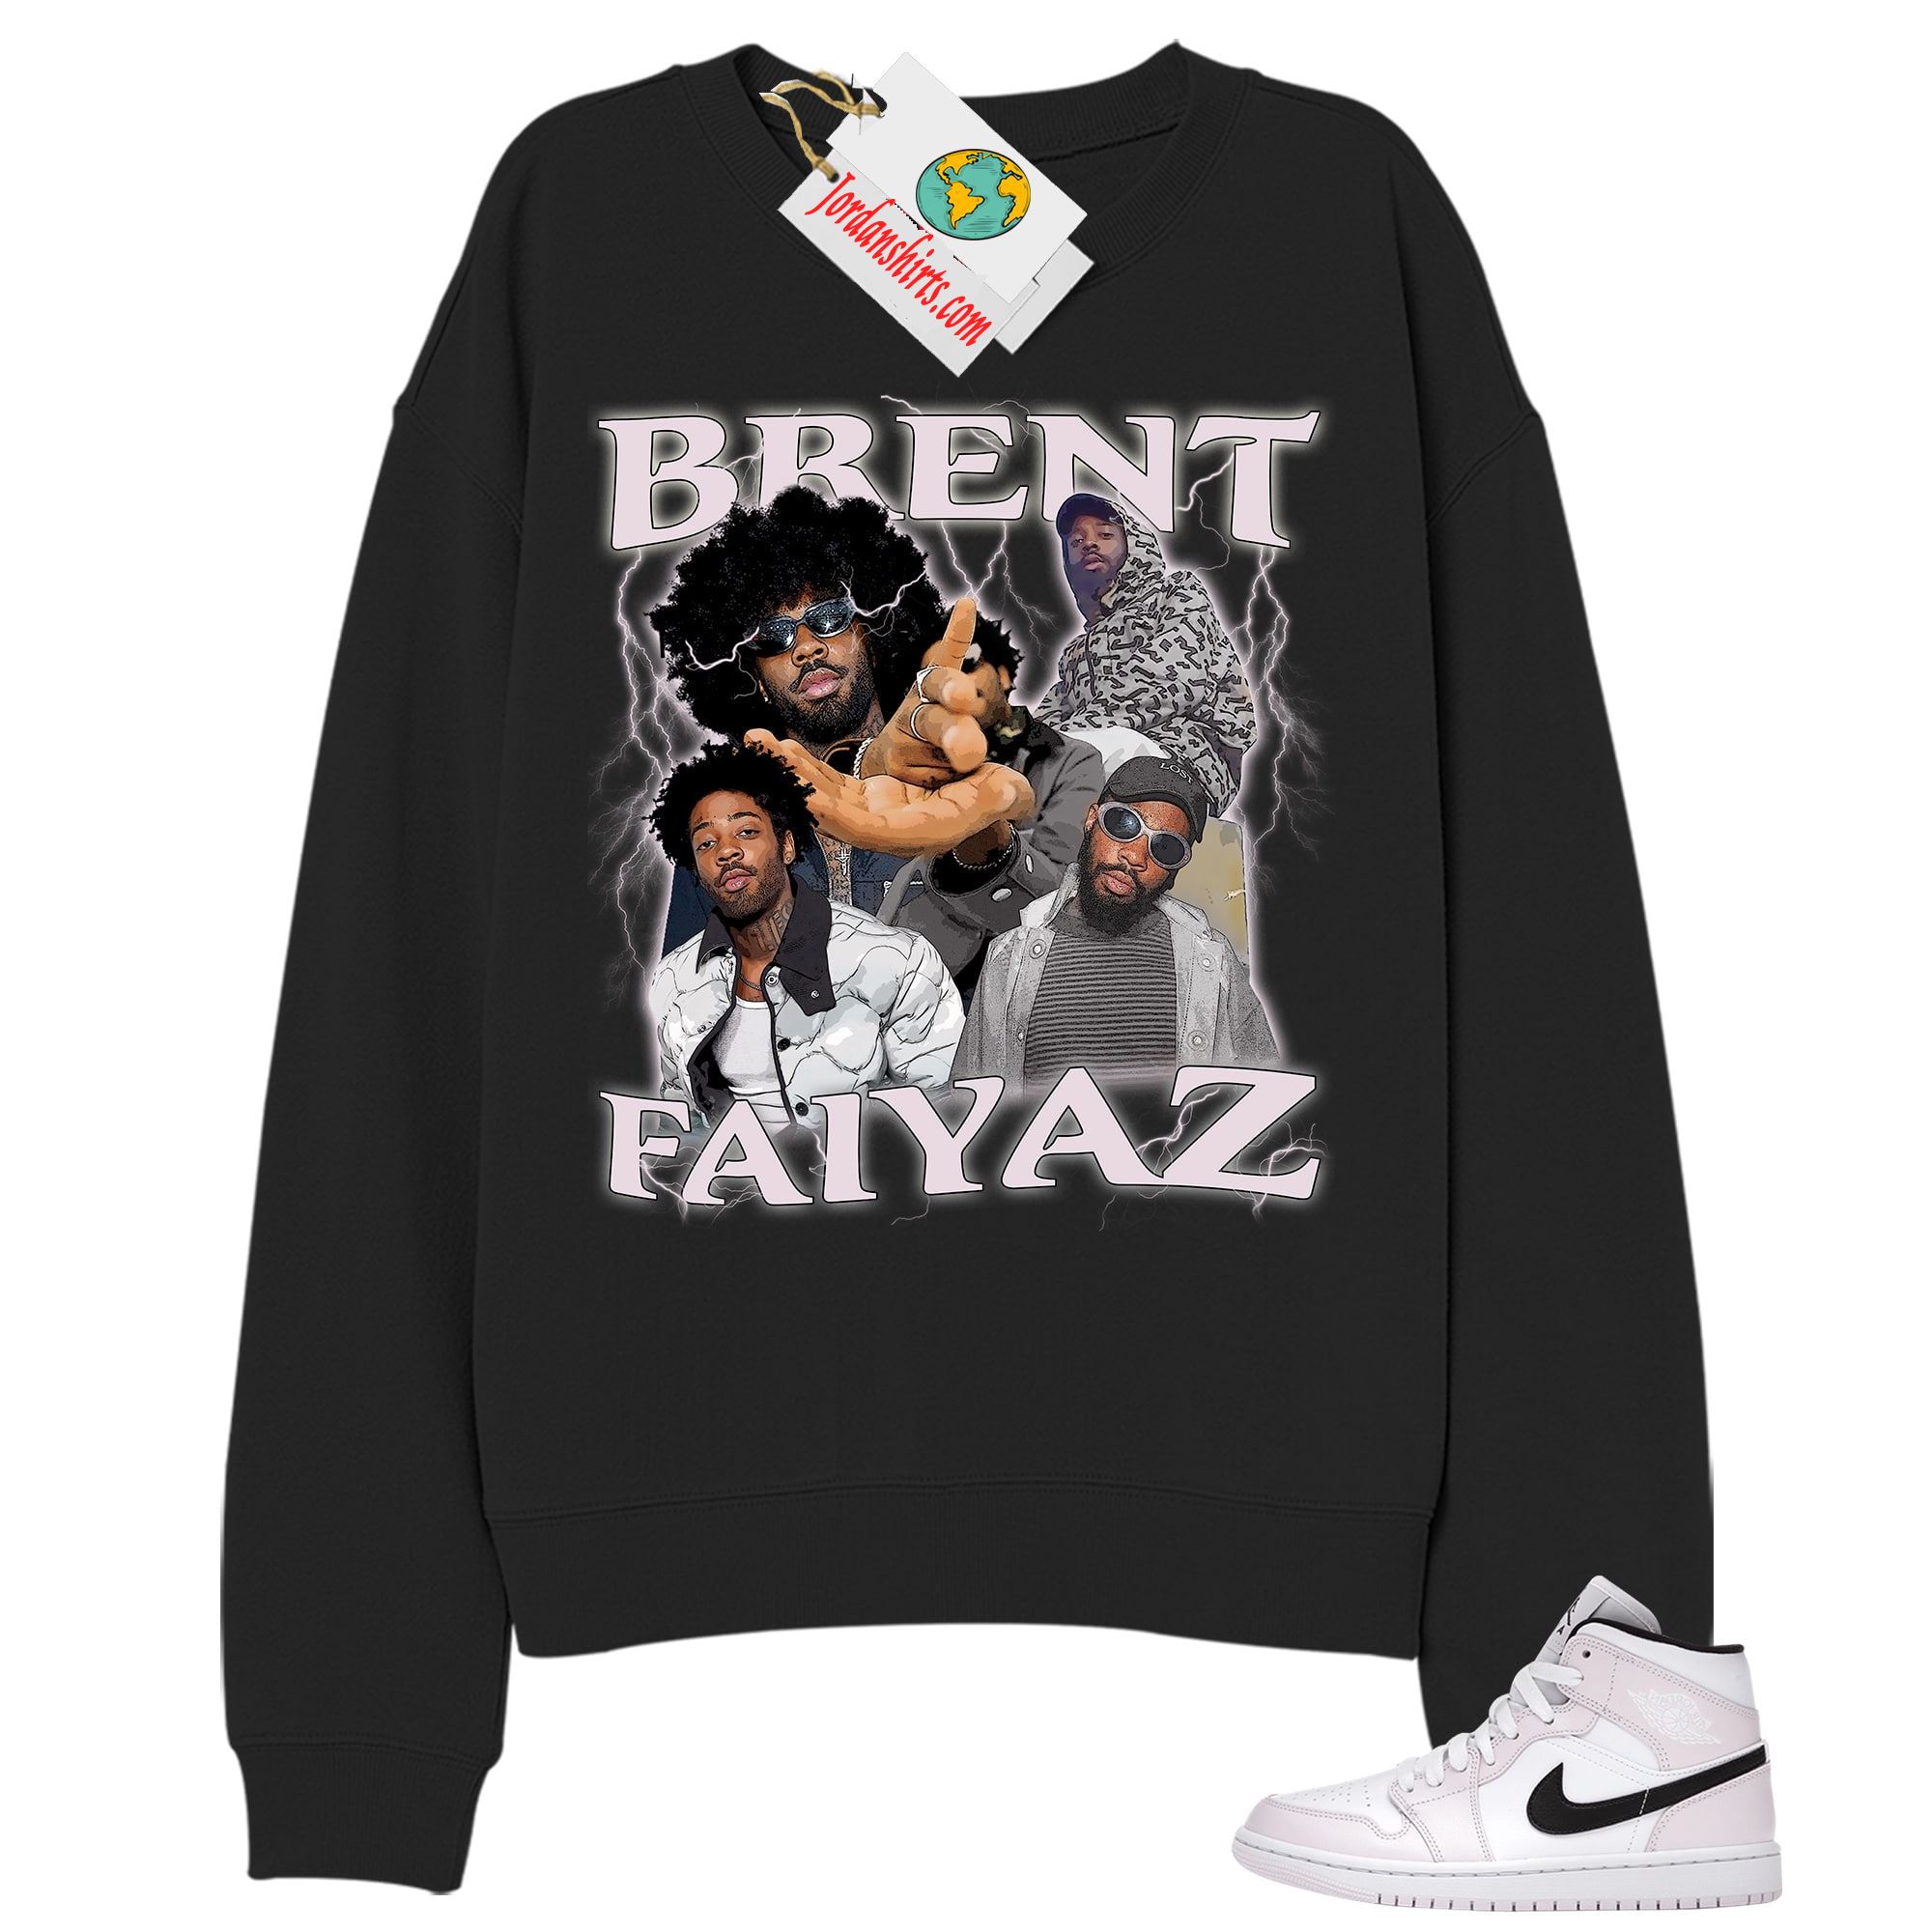 Jordan 1 Sweatshirt, Brent Faiyaz Retro Vintage 90s Hip Hop Raptees Black Sweatshirt Air Jordan 1 Barely Rose 1s Plus Size Up To 5xl